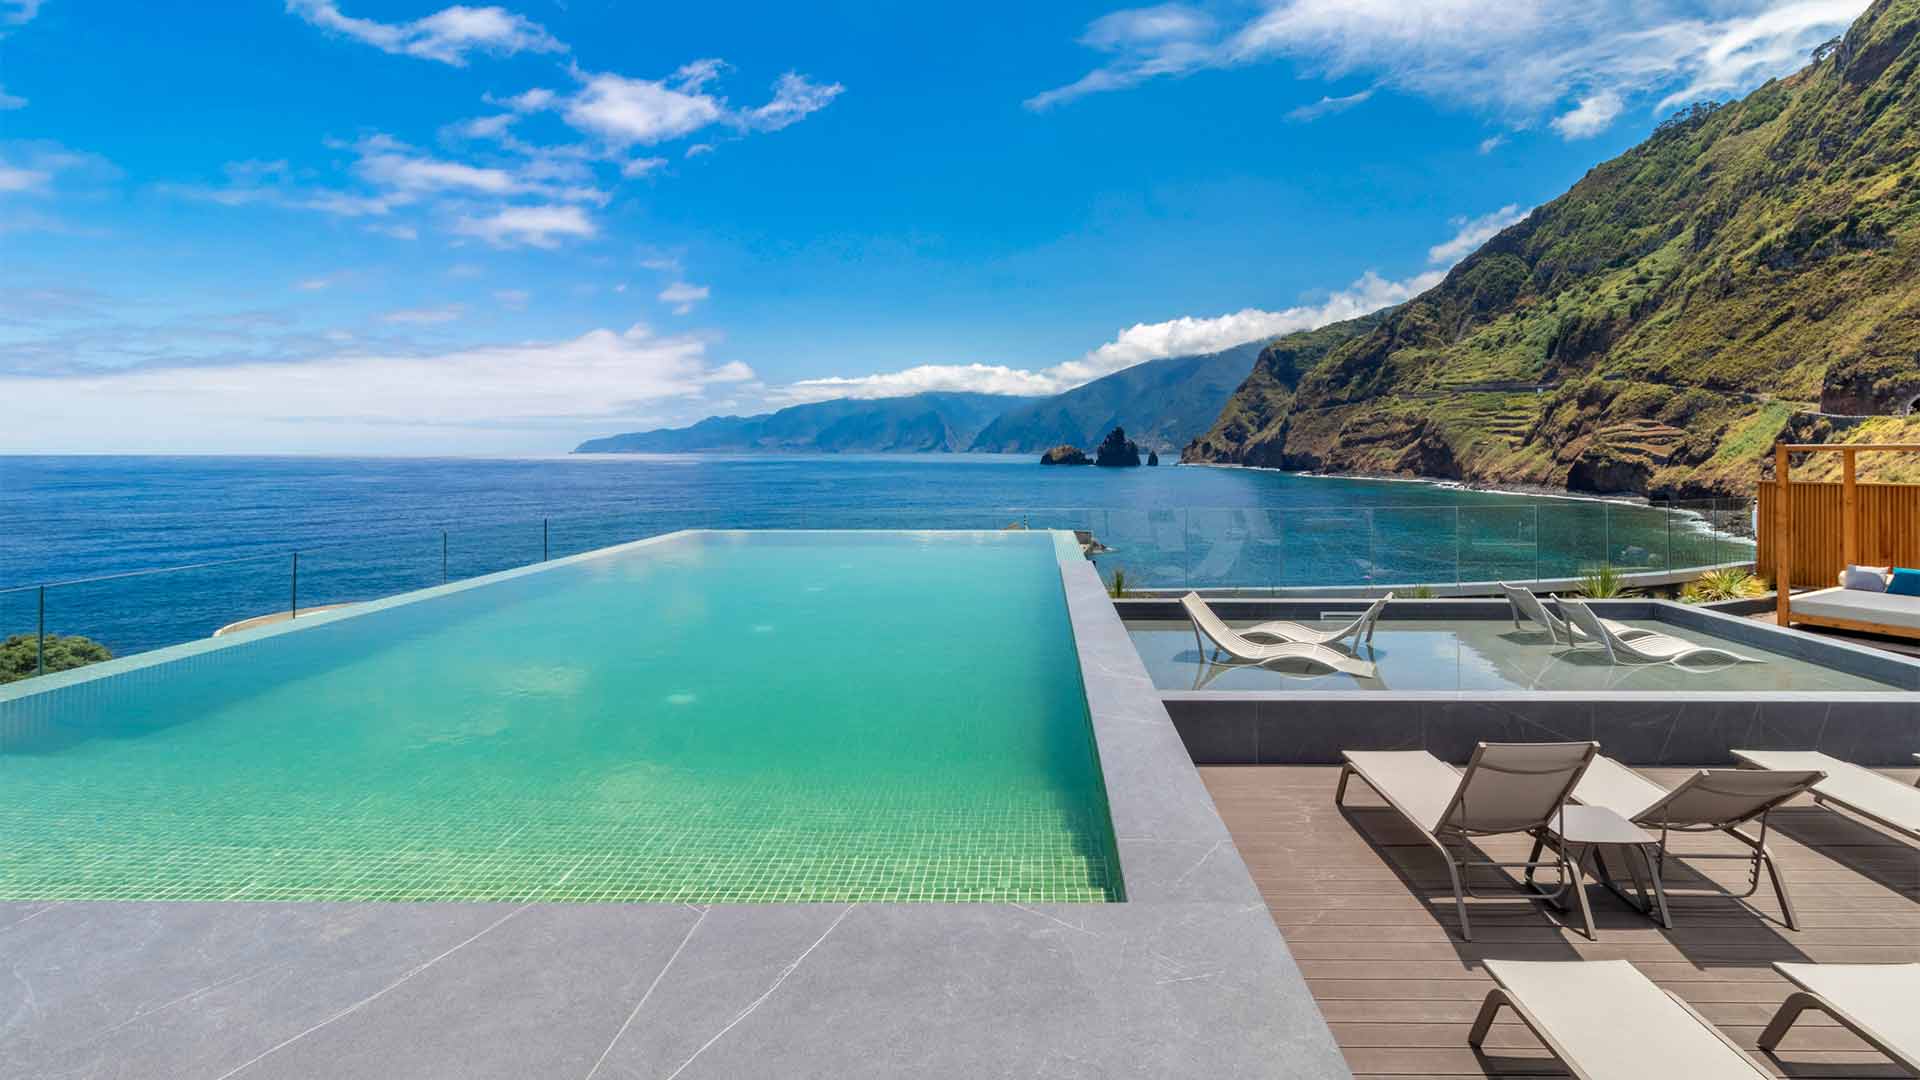 Trunk bibliotheek Vermeend Gezamenlijk Aqua Natura Bay - Visit Madeira | Madeira Islands Tourism Board official  website